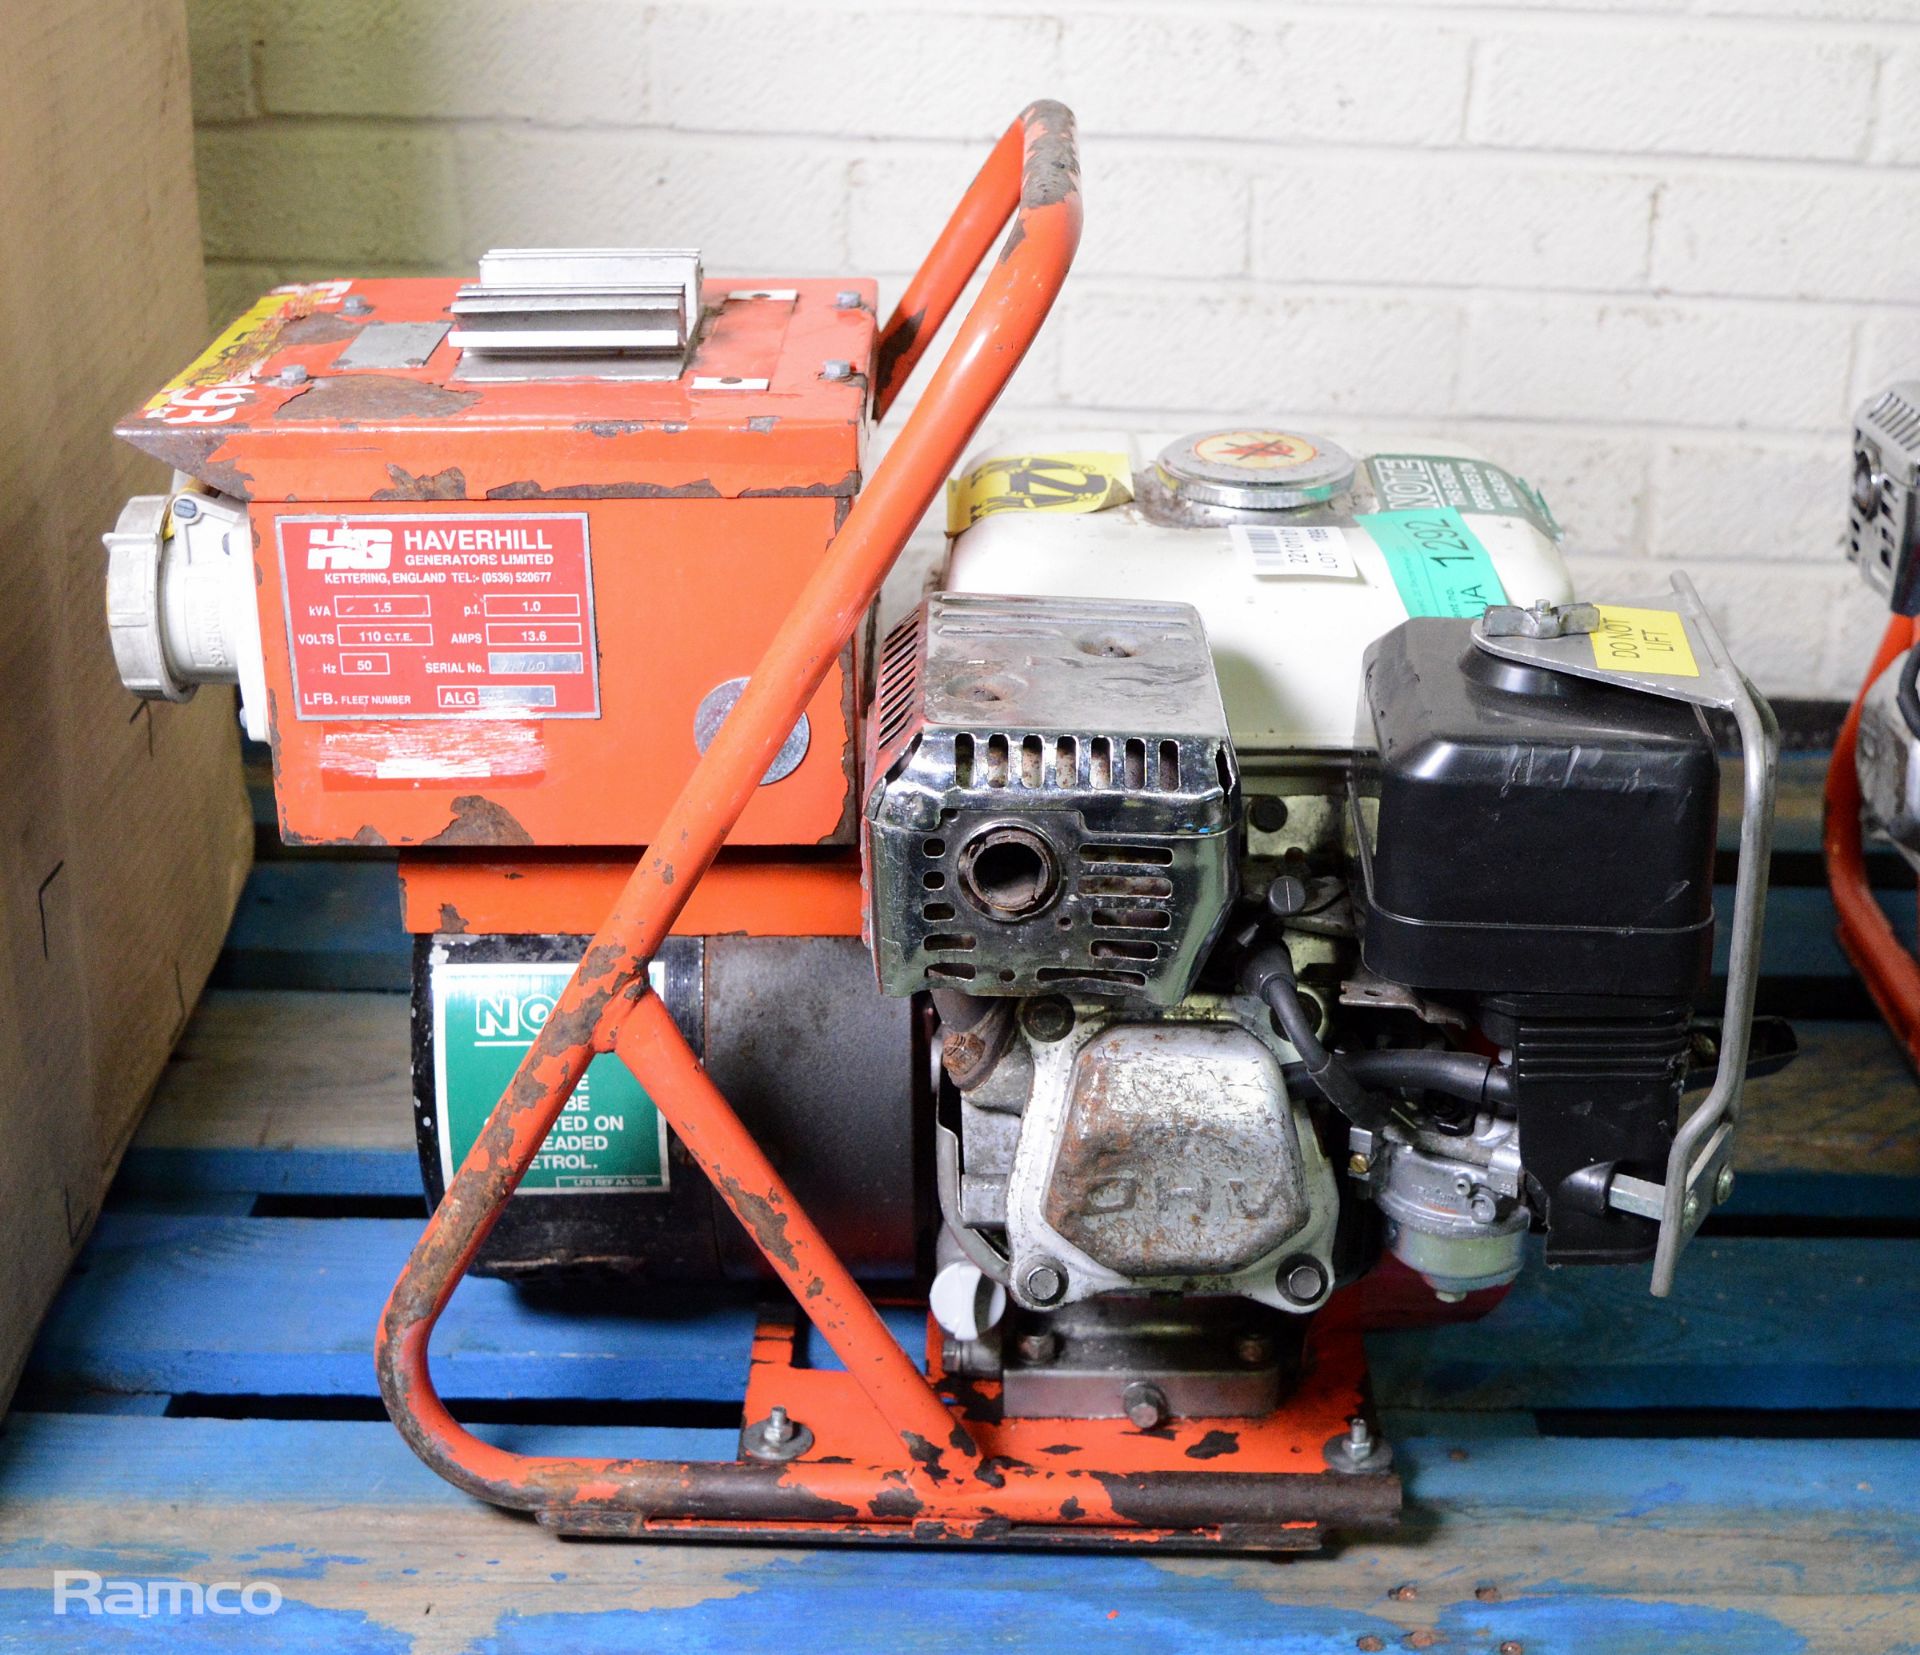 Honda petrol driven generator - 1.5KVA - 110V 50hz 13.6amps - Image 4 of 6